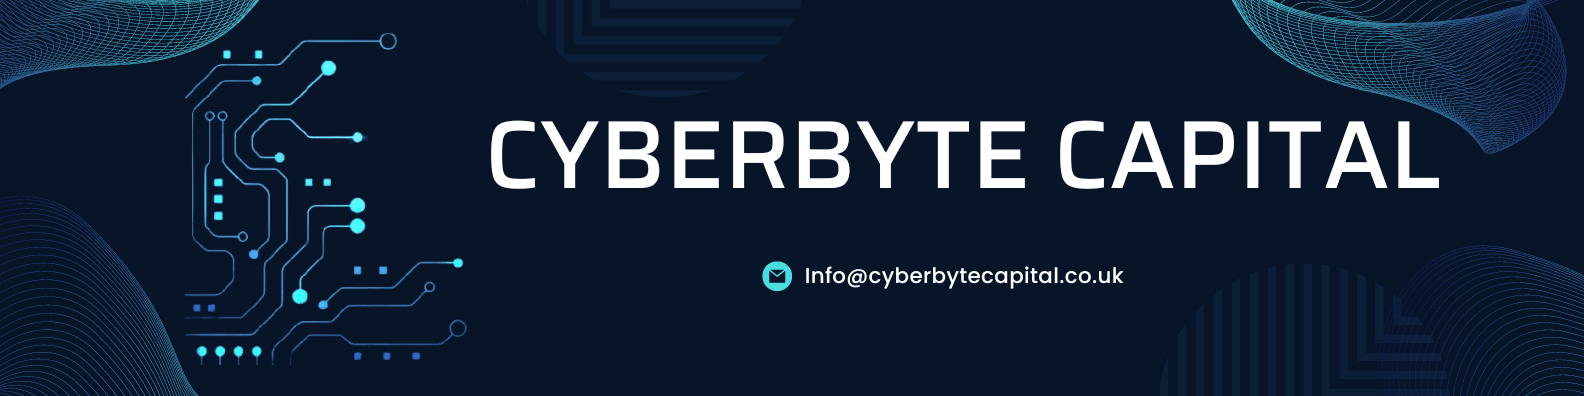 CyberByte-Capital バナー